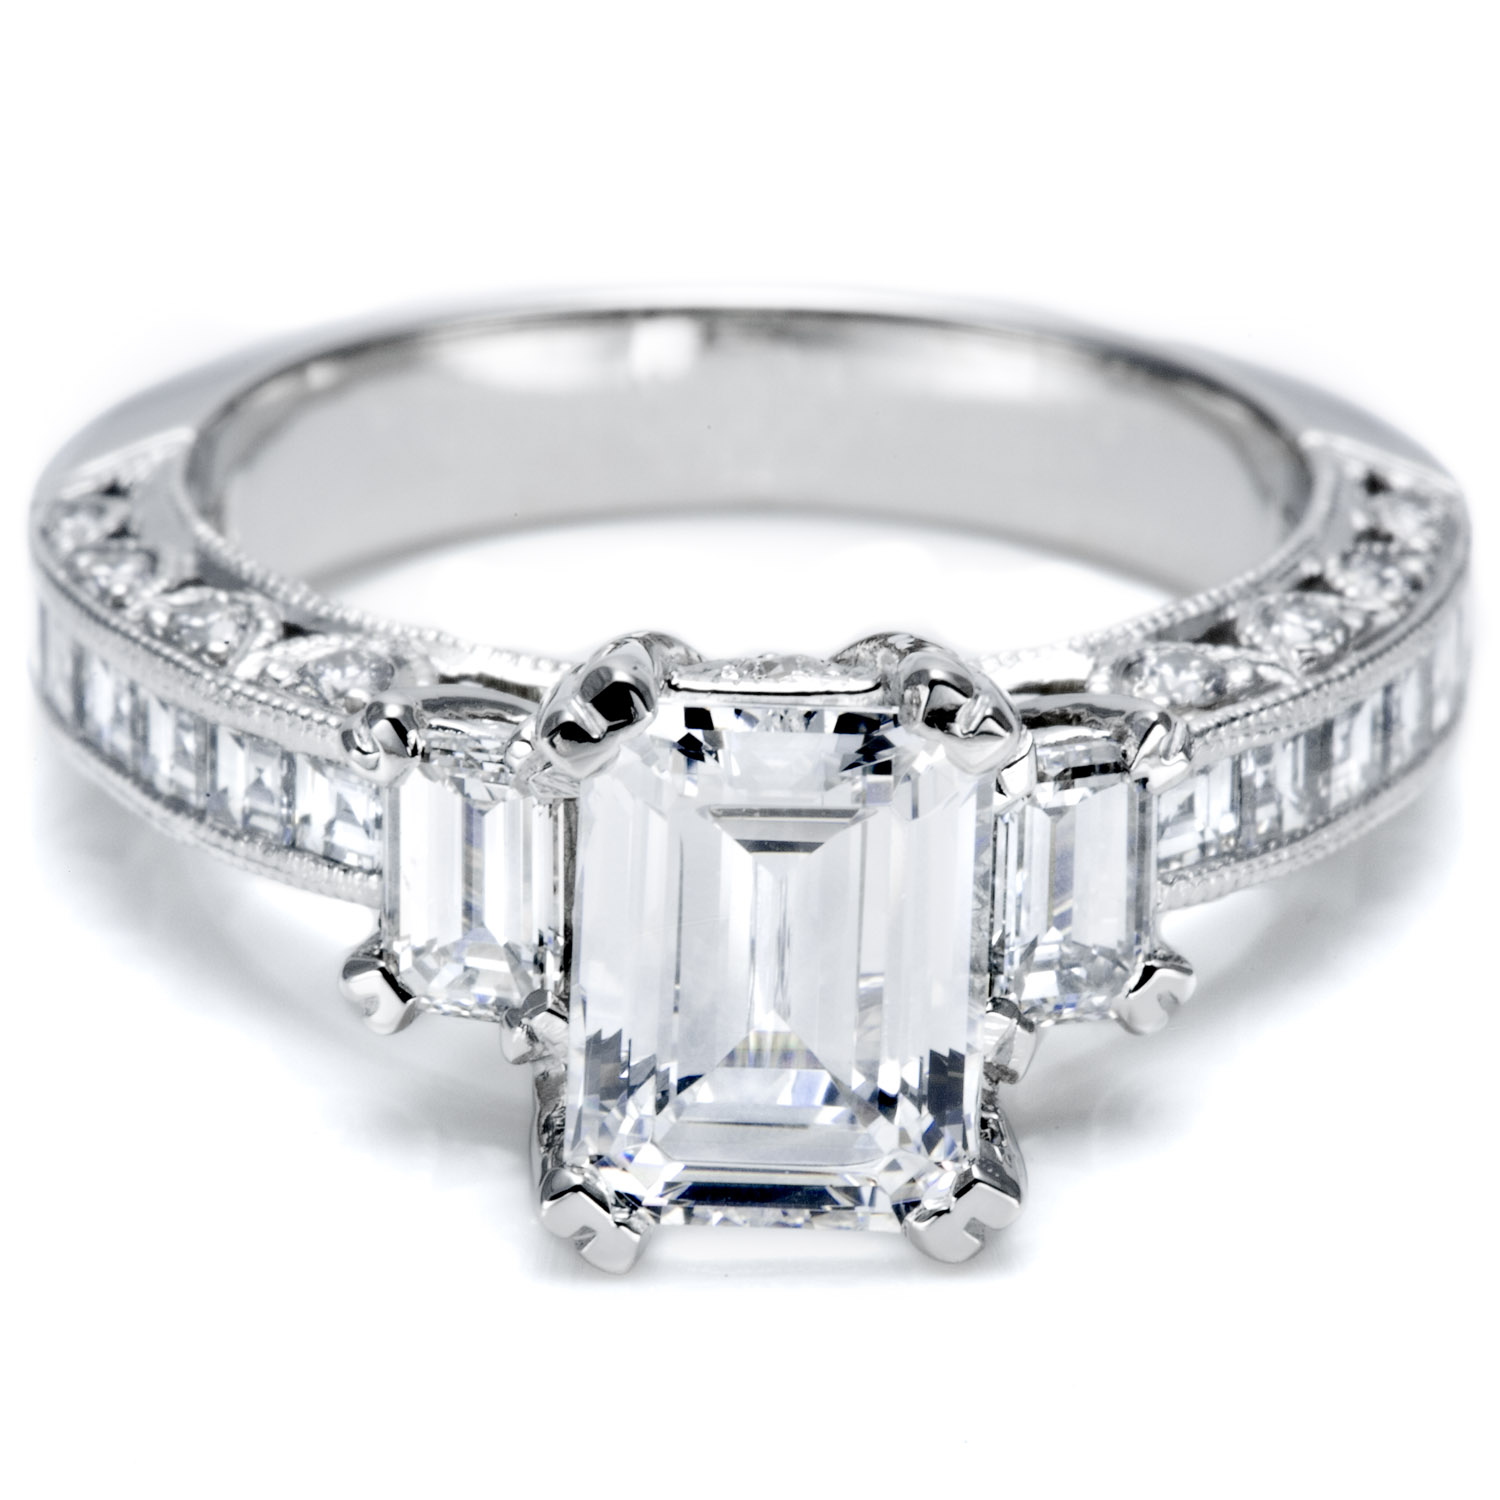 Emerald Cut Diamond Rings, Exquisite Beauty